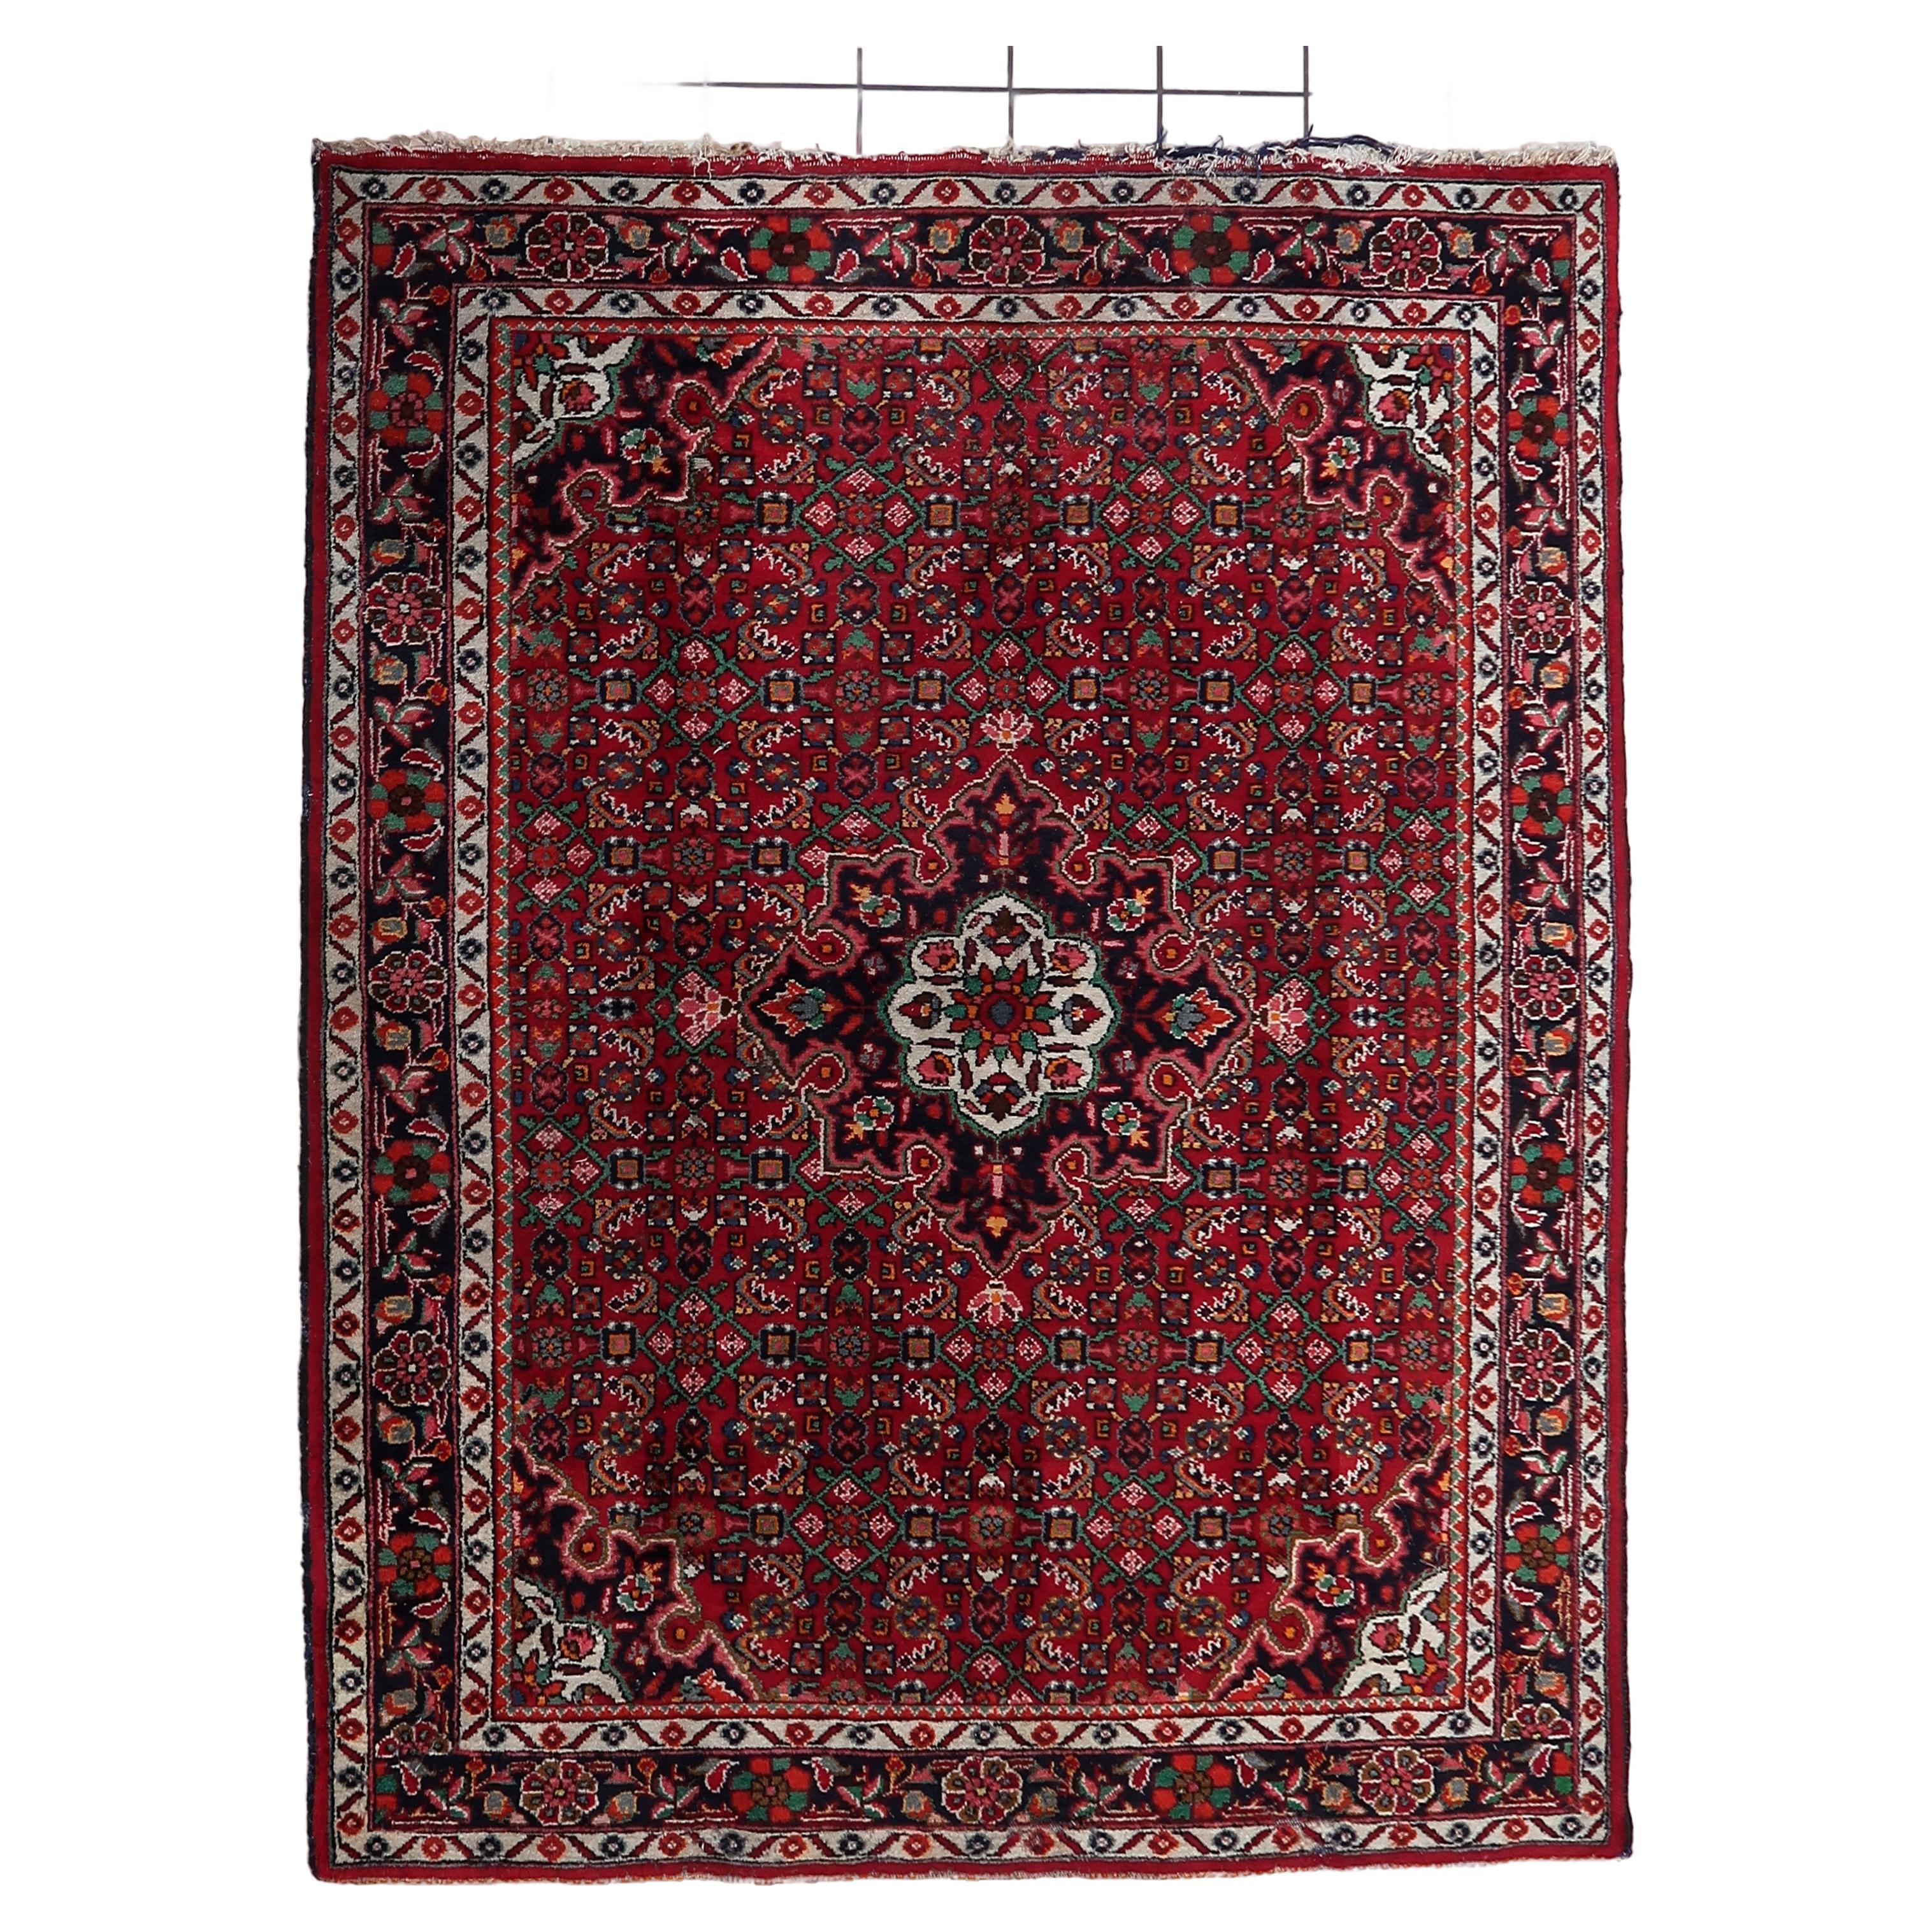 Handmade Vintage Persian Malayer Rug 5.4' x 7.1' (167cm x 219cm), 1960s - 1C1110